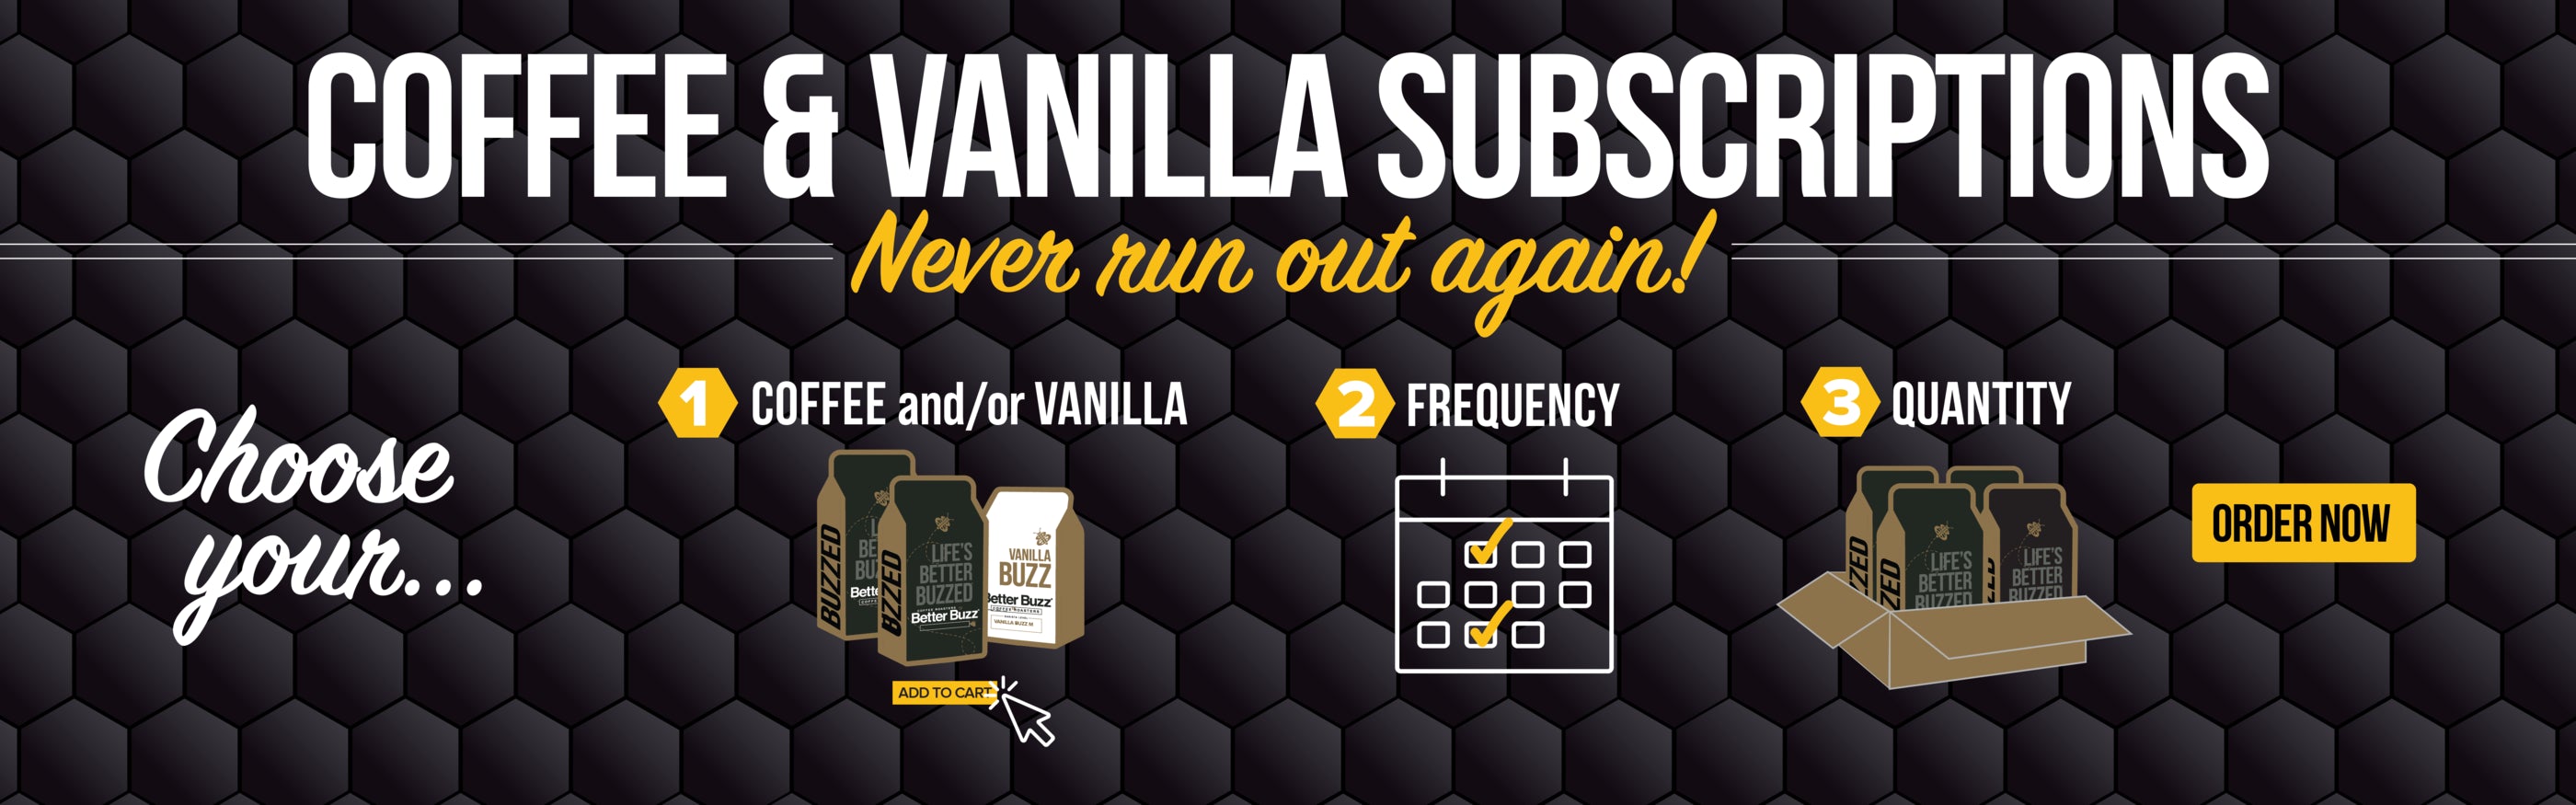 Coffee & Vanilla Subscriptions